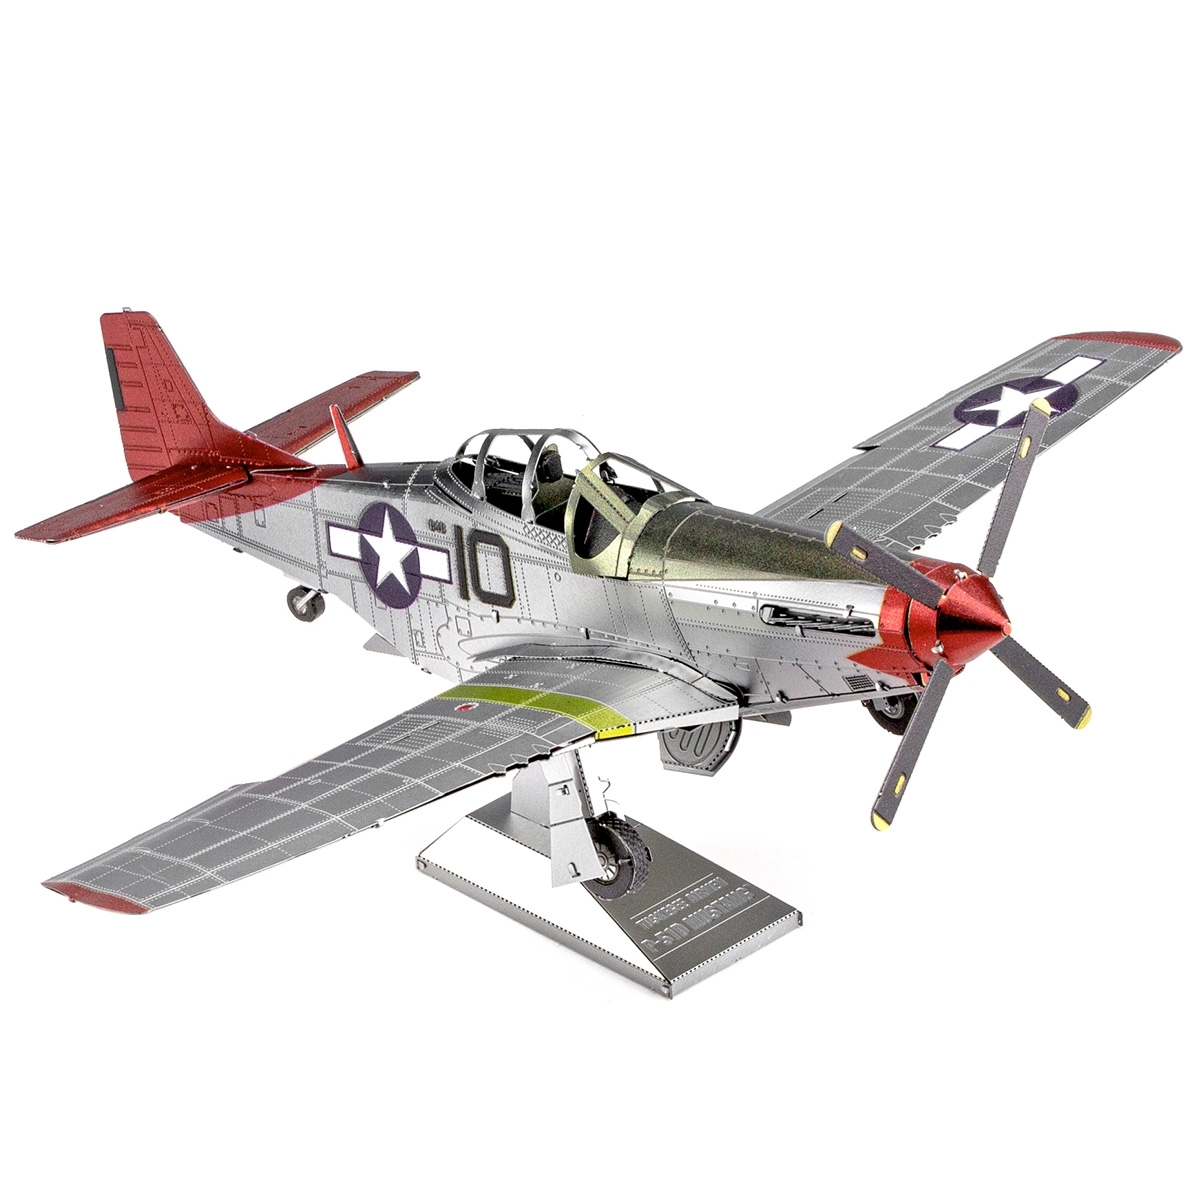 WWII P-51D MUSTANG TUSKEGEE AIRMEN DARON 1:100 SCALE DIECAST DISPLAY MODEL 